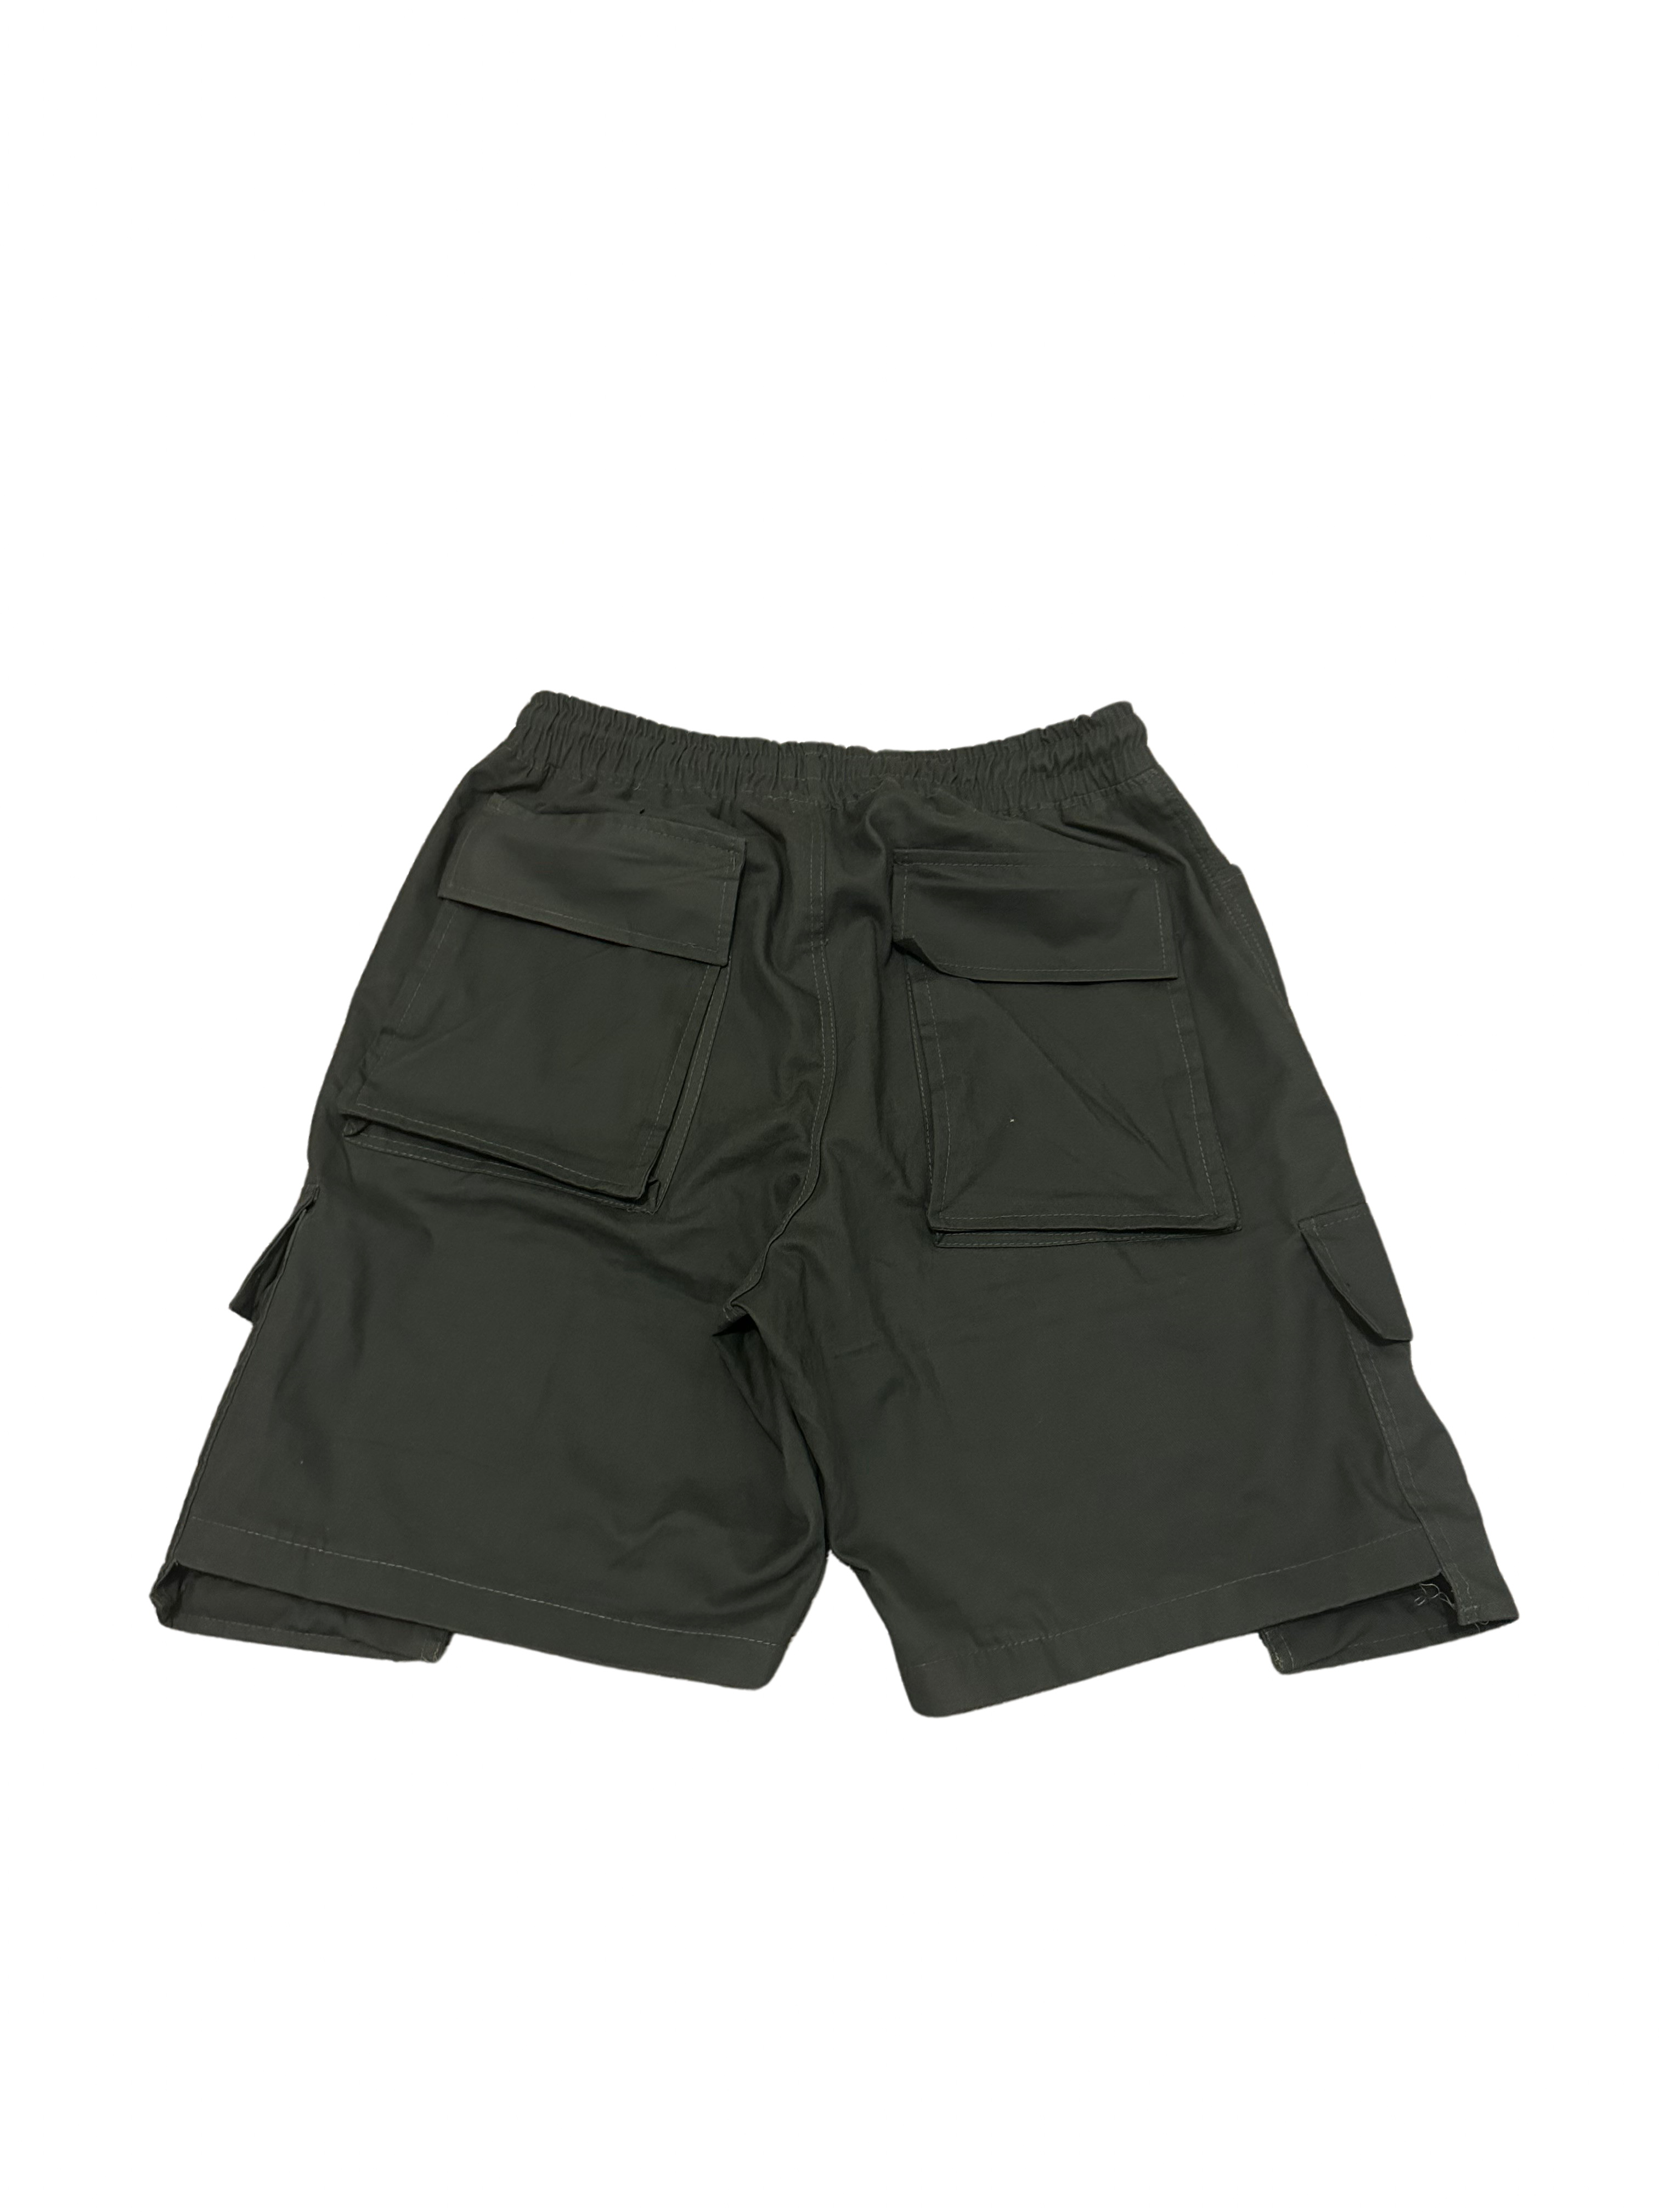 .Olive Pocket Shorts